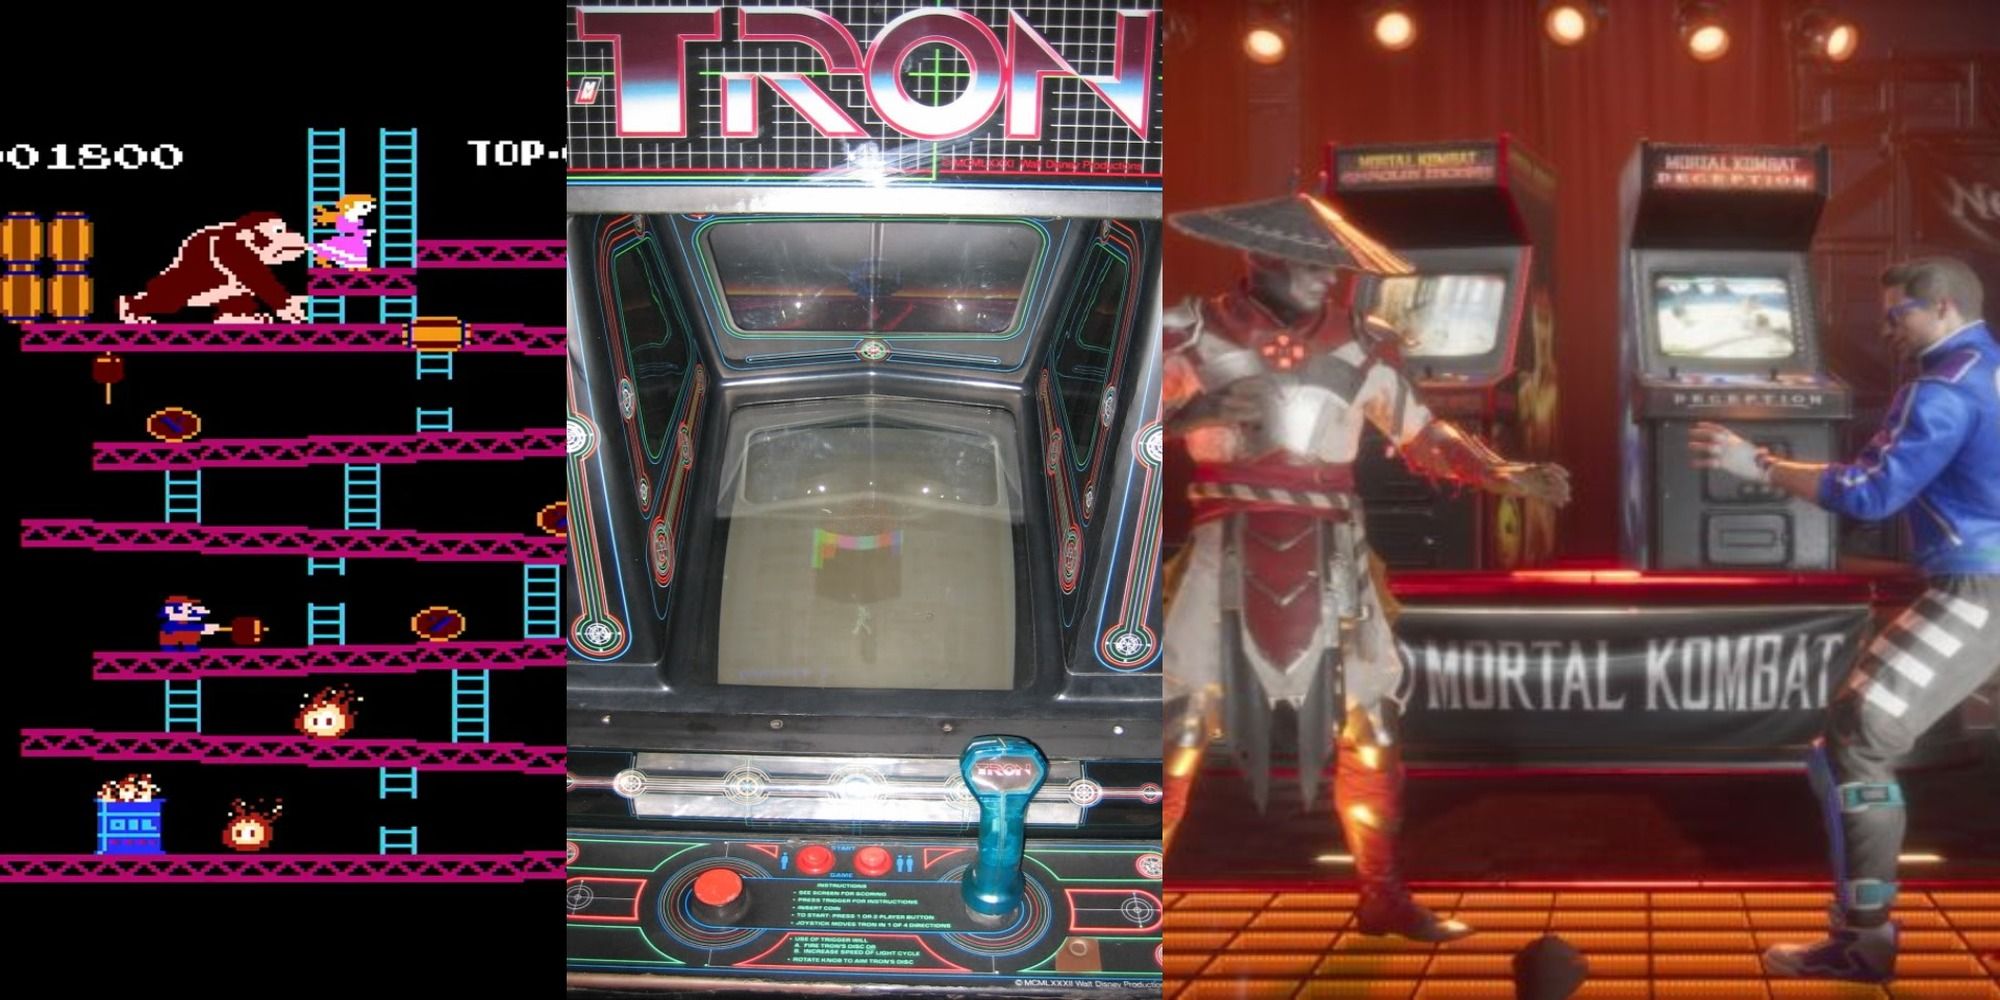 title image arcade games with great lore Donkey Kong Mortal Kombat TRON